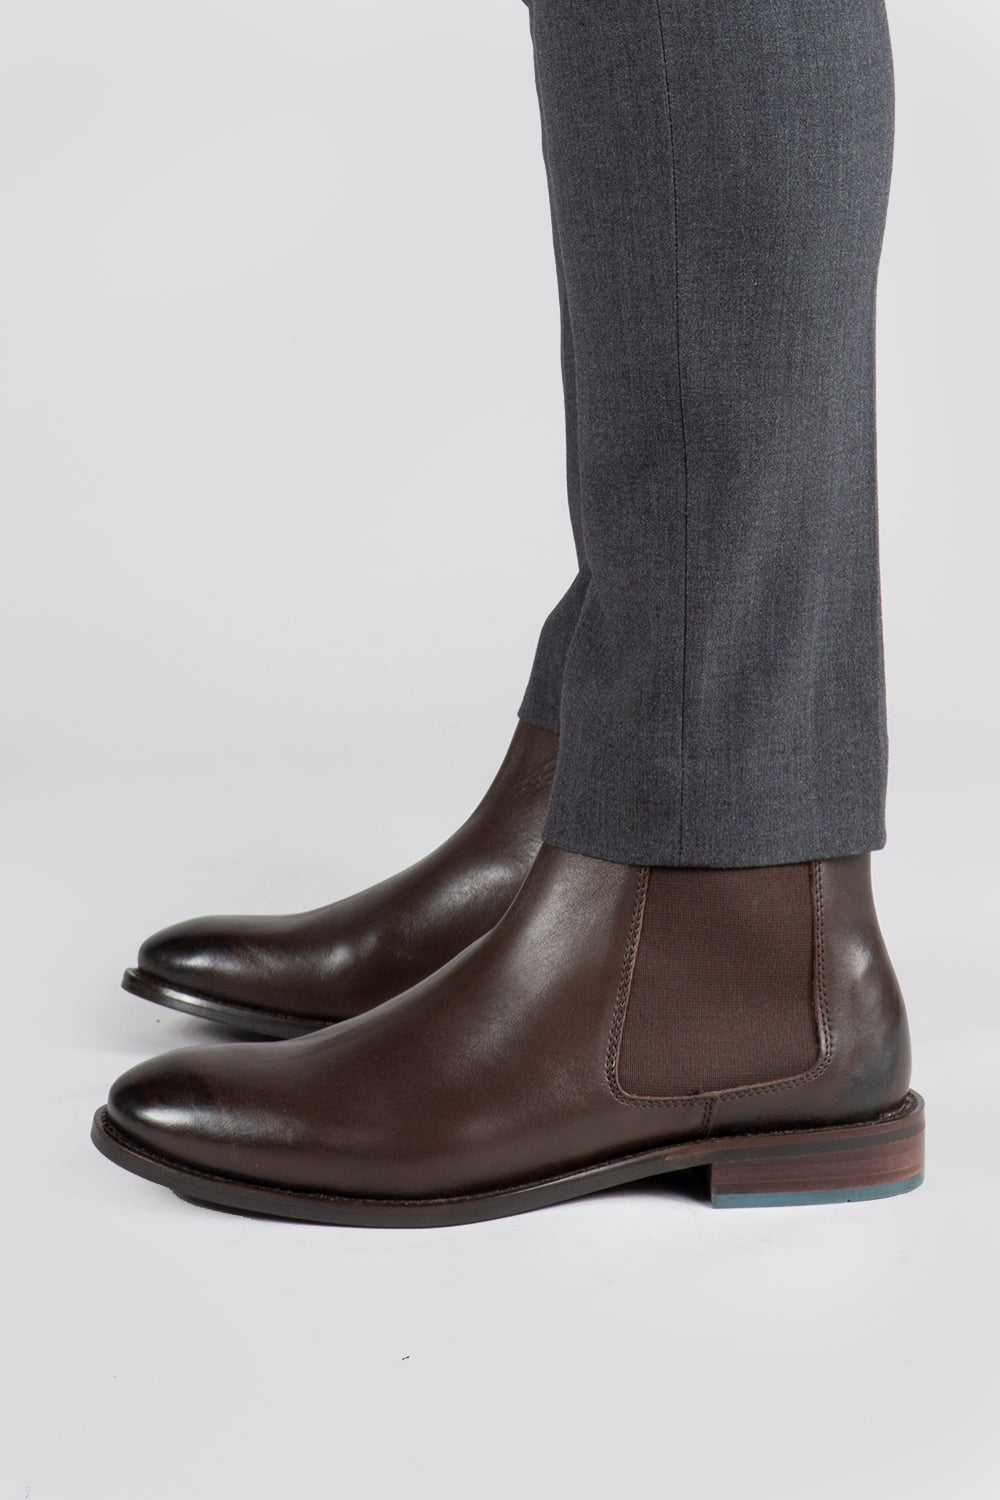 model wearing Men's brown leather Chelsea boot